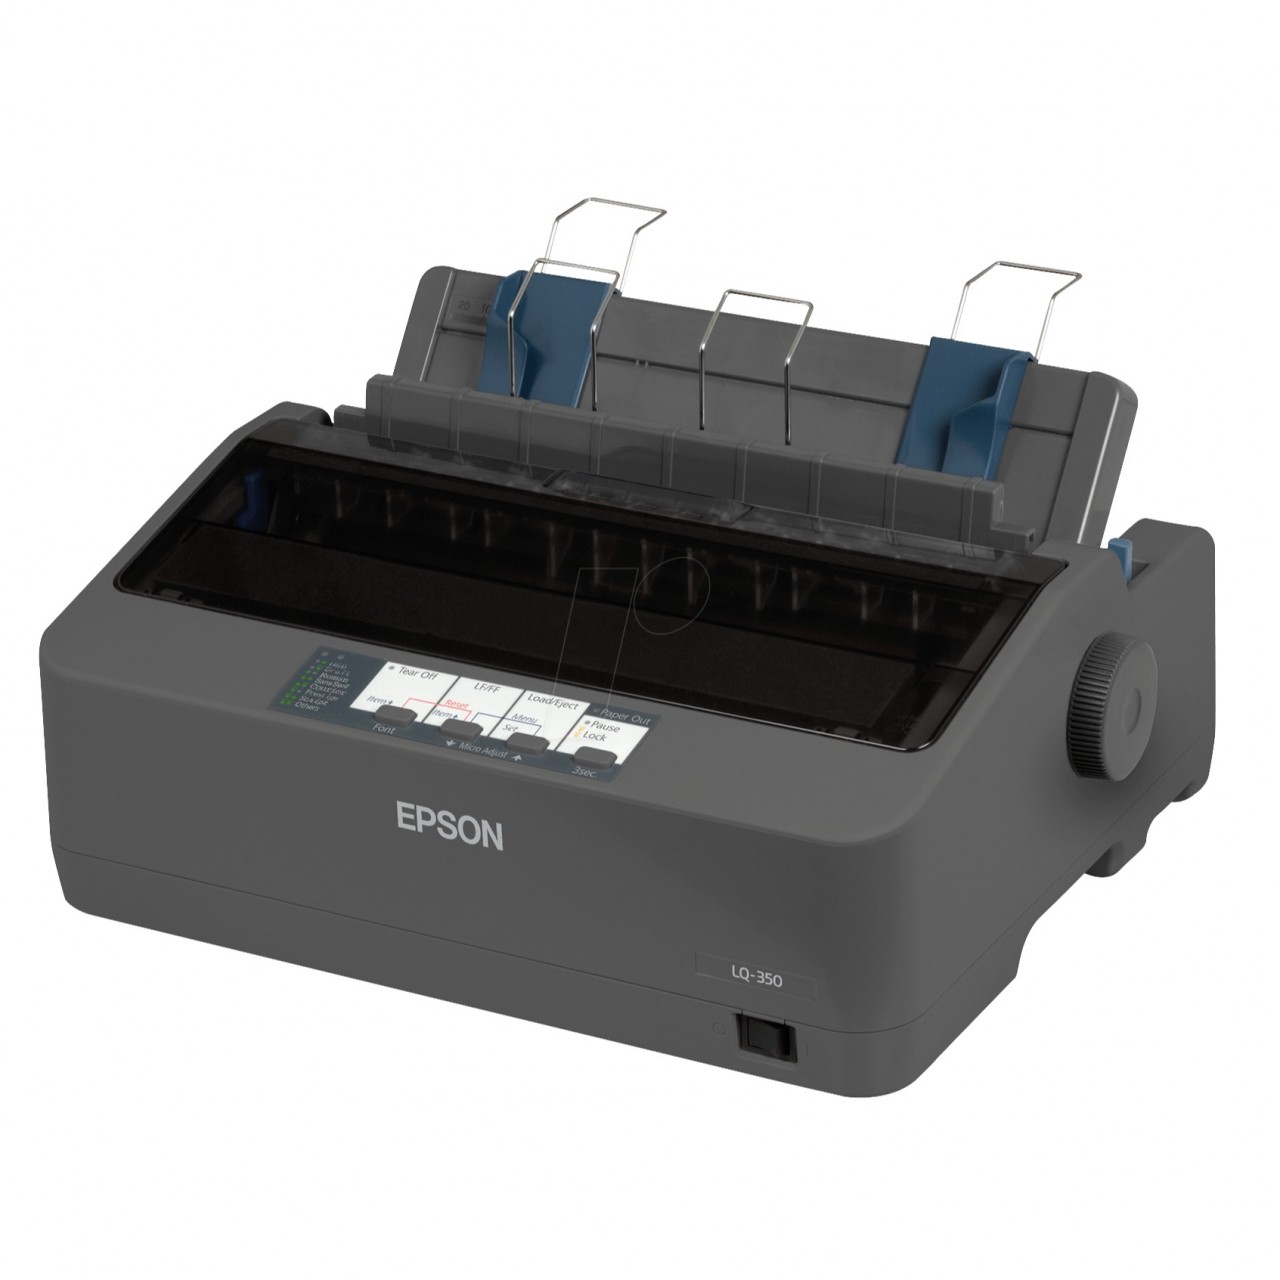 Epson Lq 350 Dot Matrix Printer 24 Pins And 80 Columns Sale Price Buy Online In Pakistan 6073